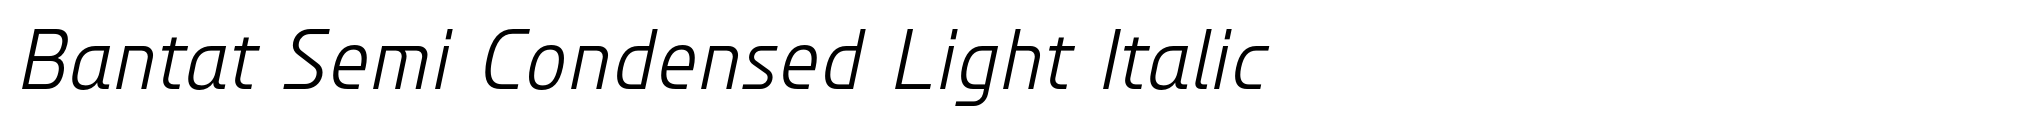 Bantat Semi Condensed Light Italic image